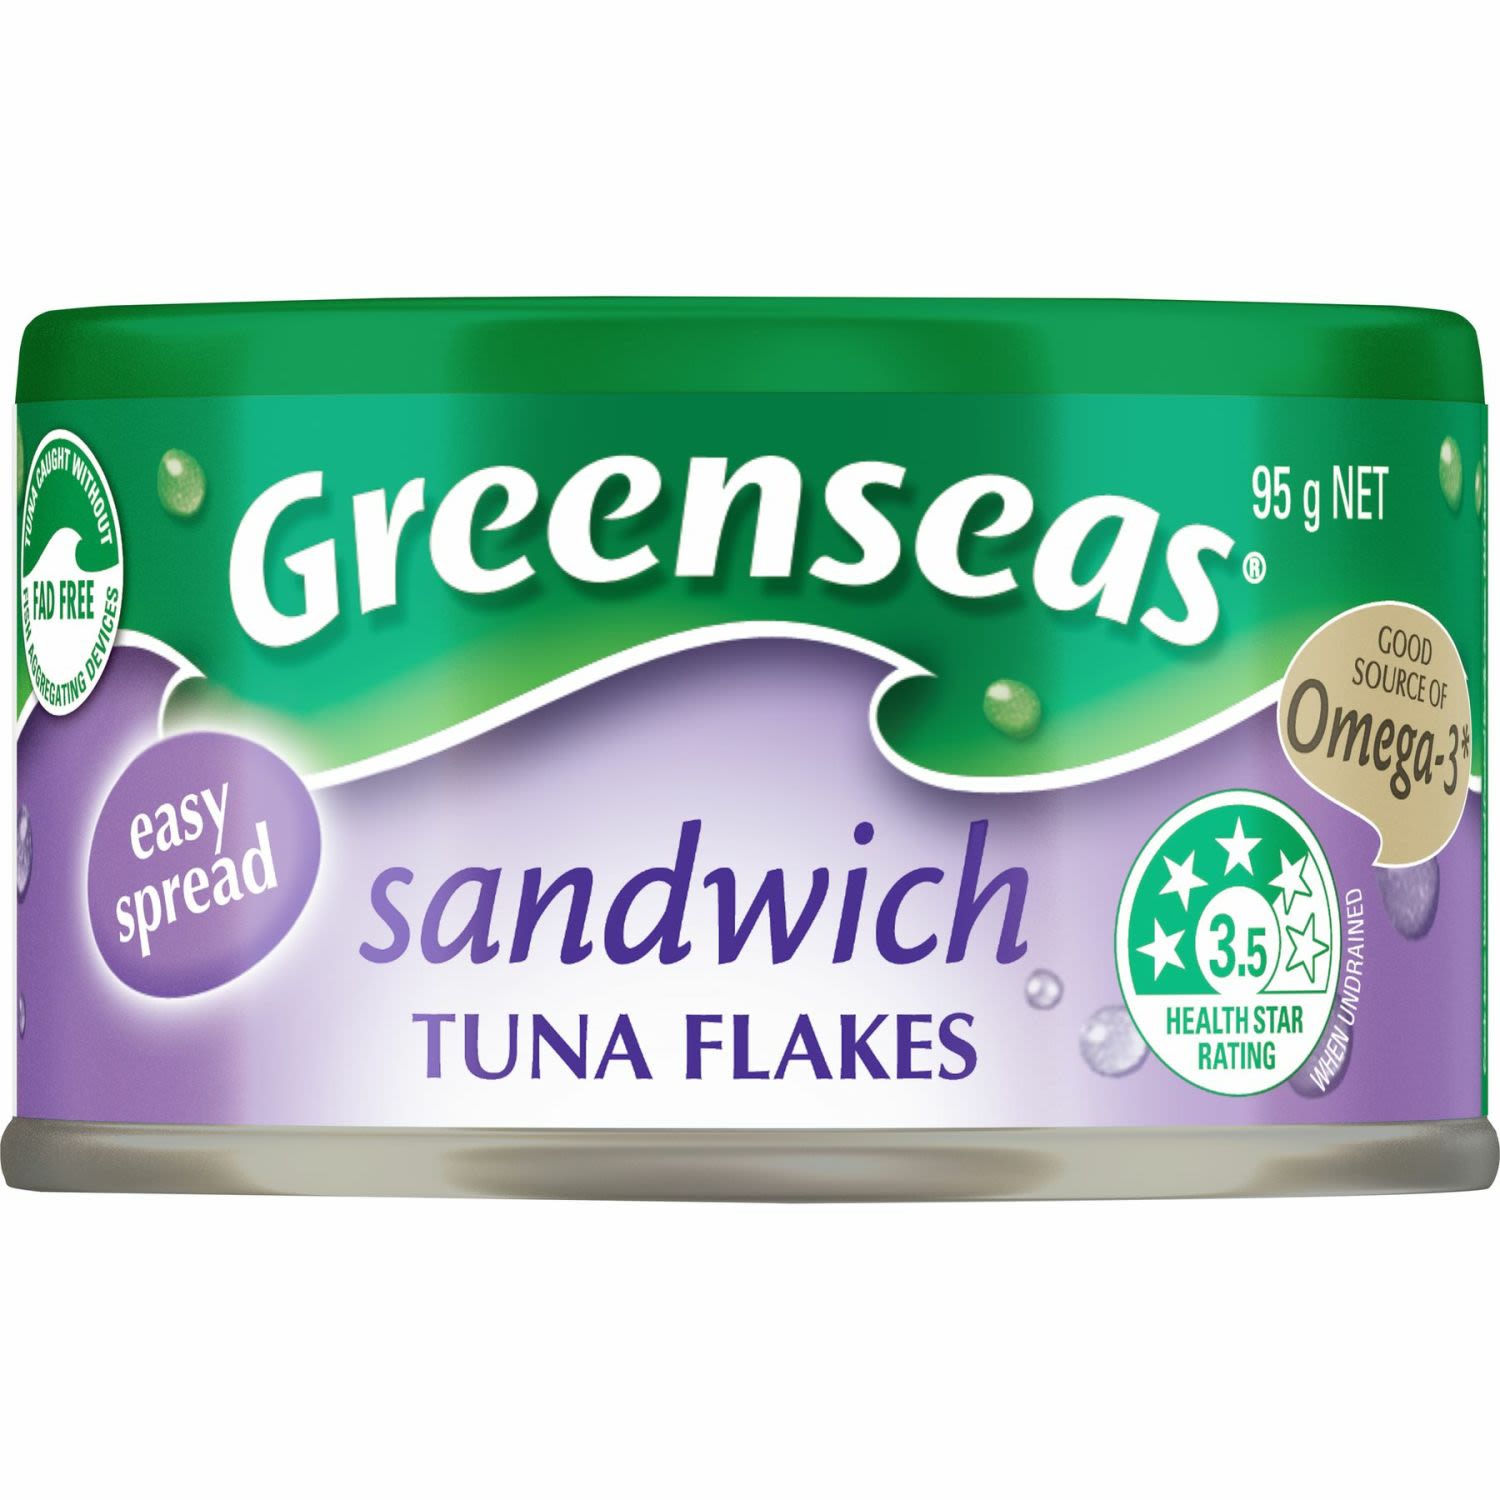 Greenseas Sandwich Tuna Flakes, 95 Gram